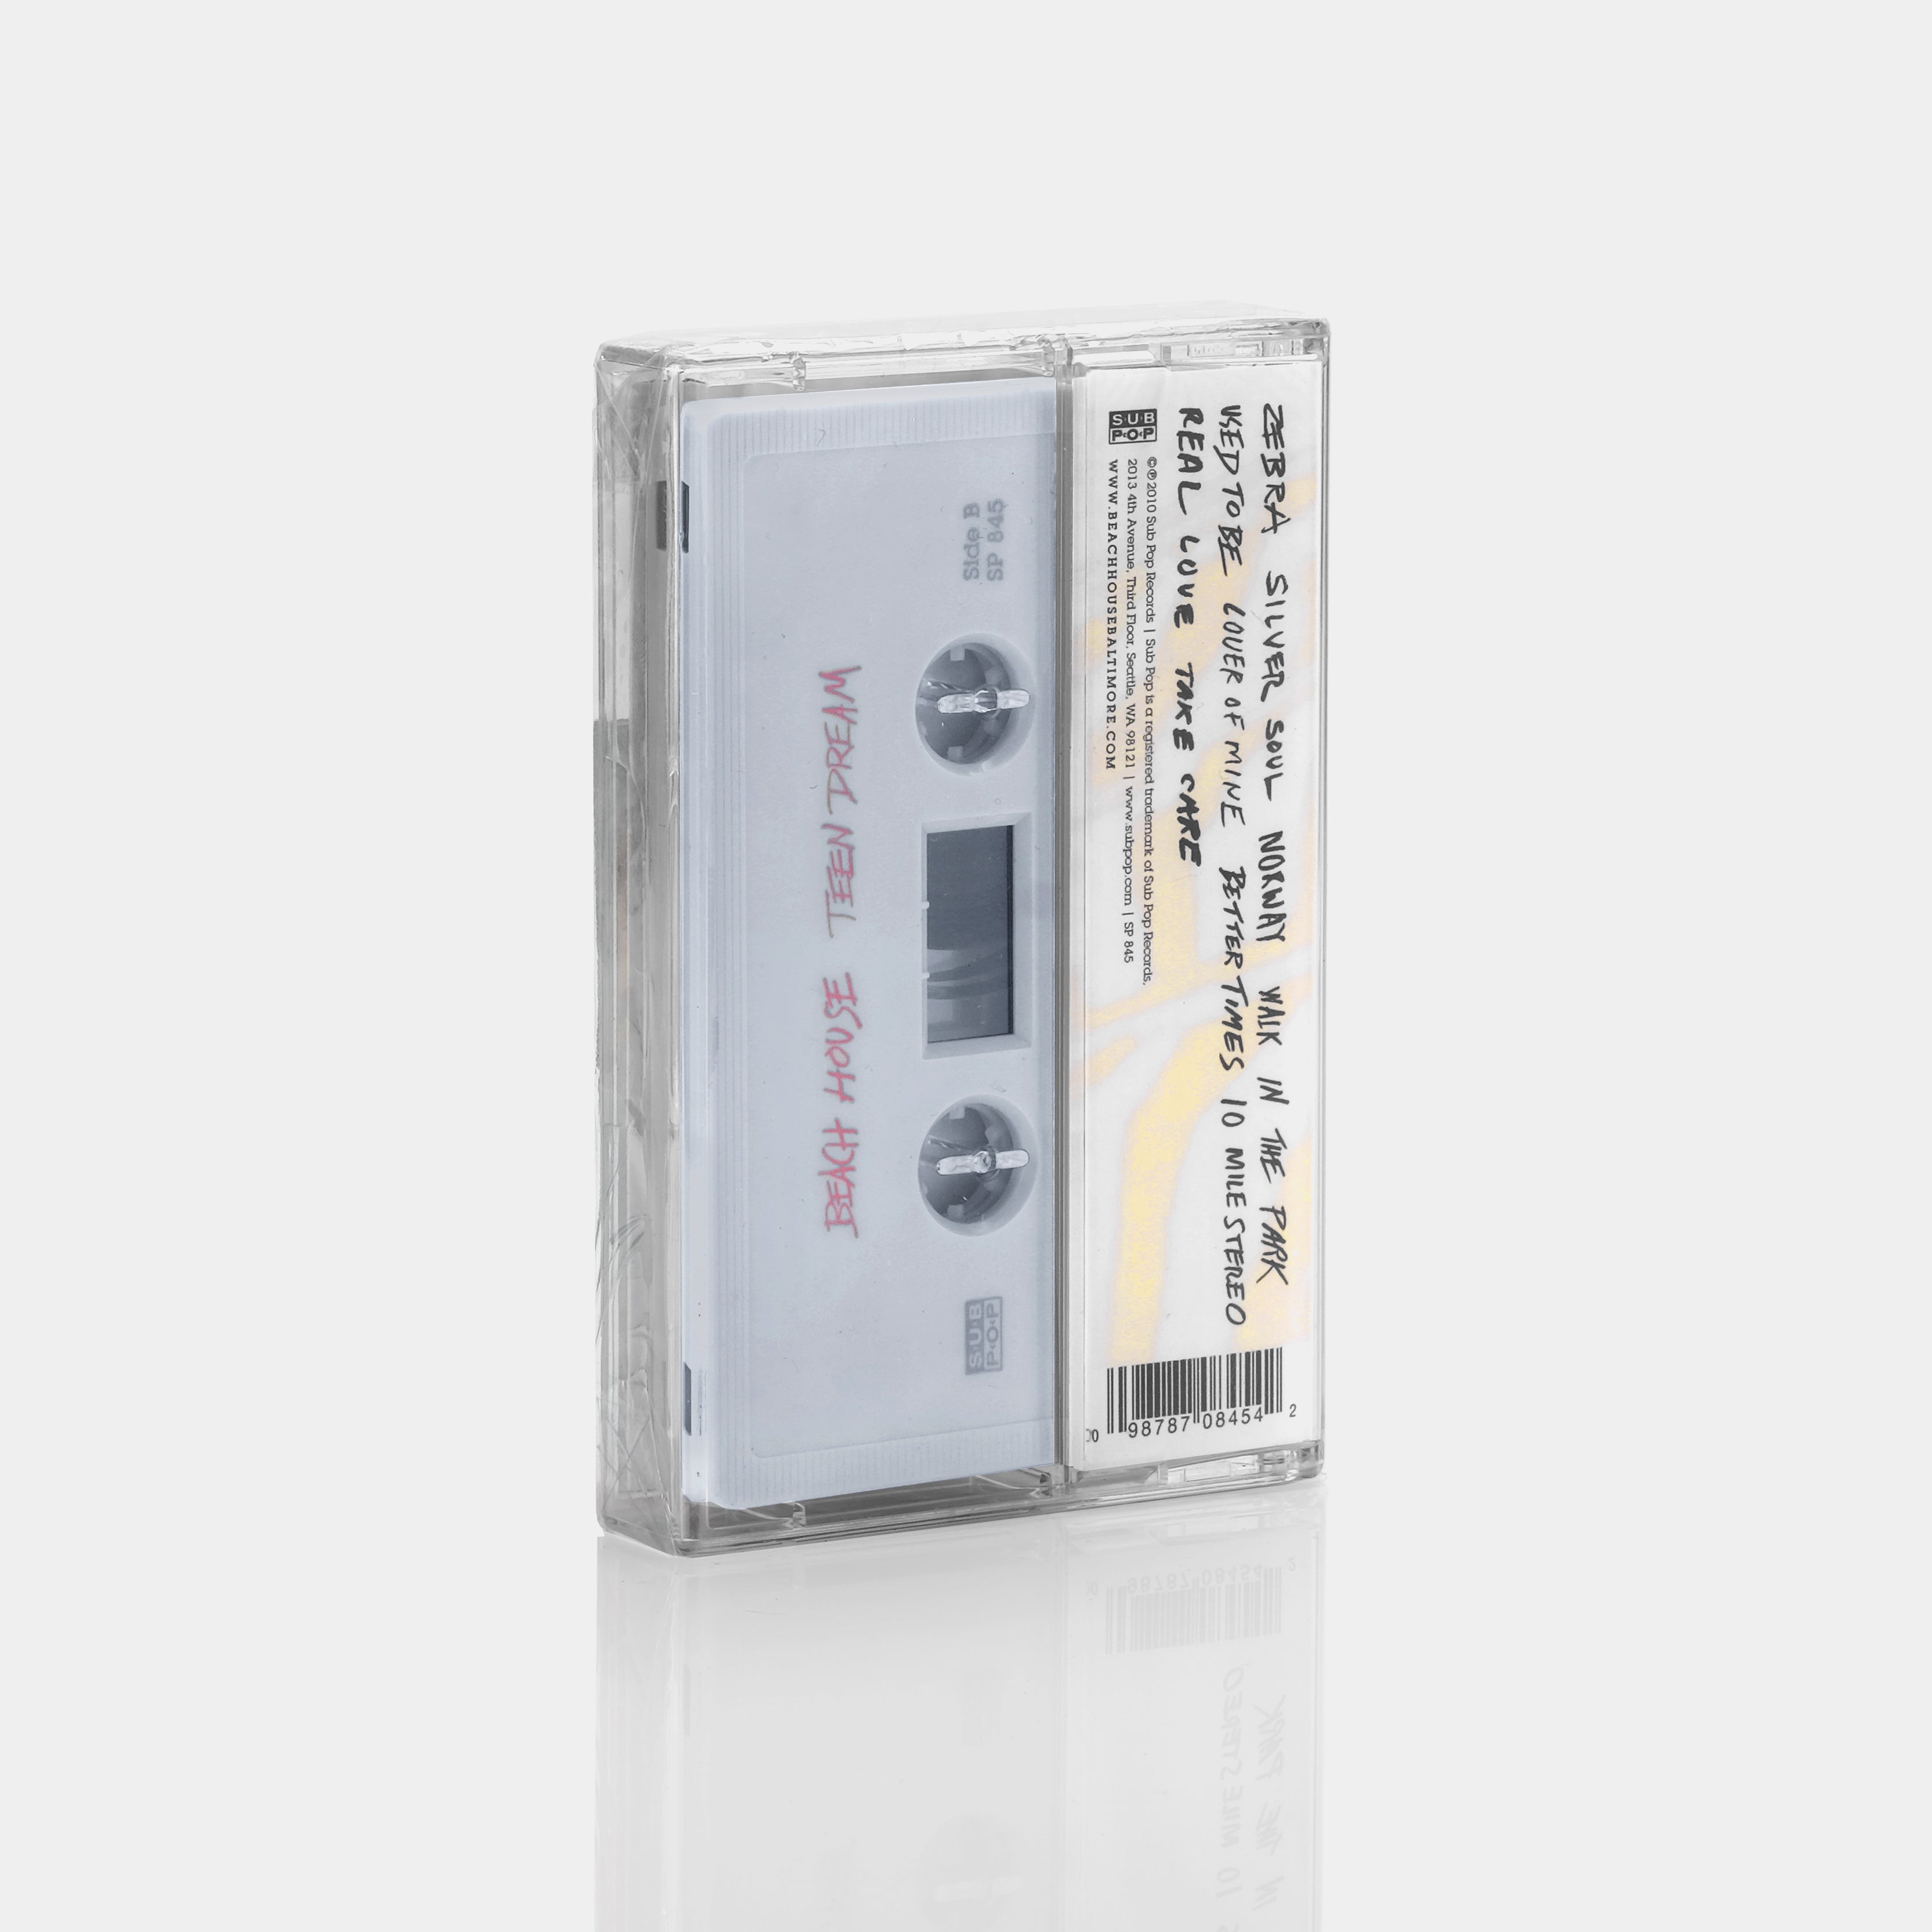 Beach House - Teen Dream Cassette Tape